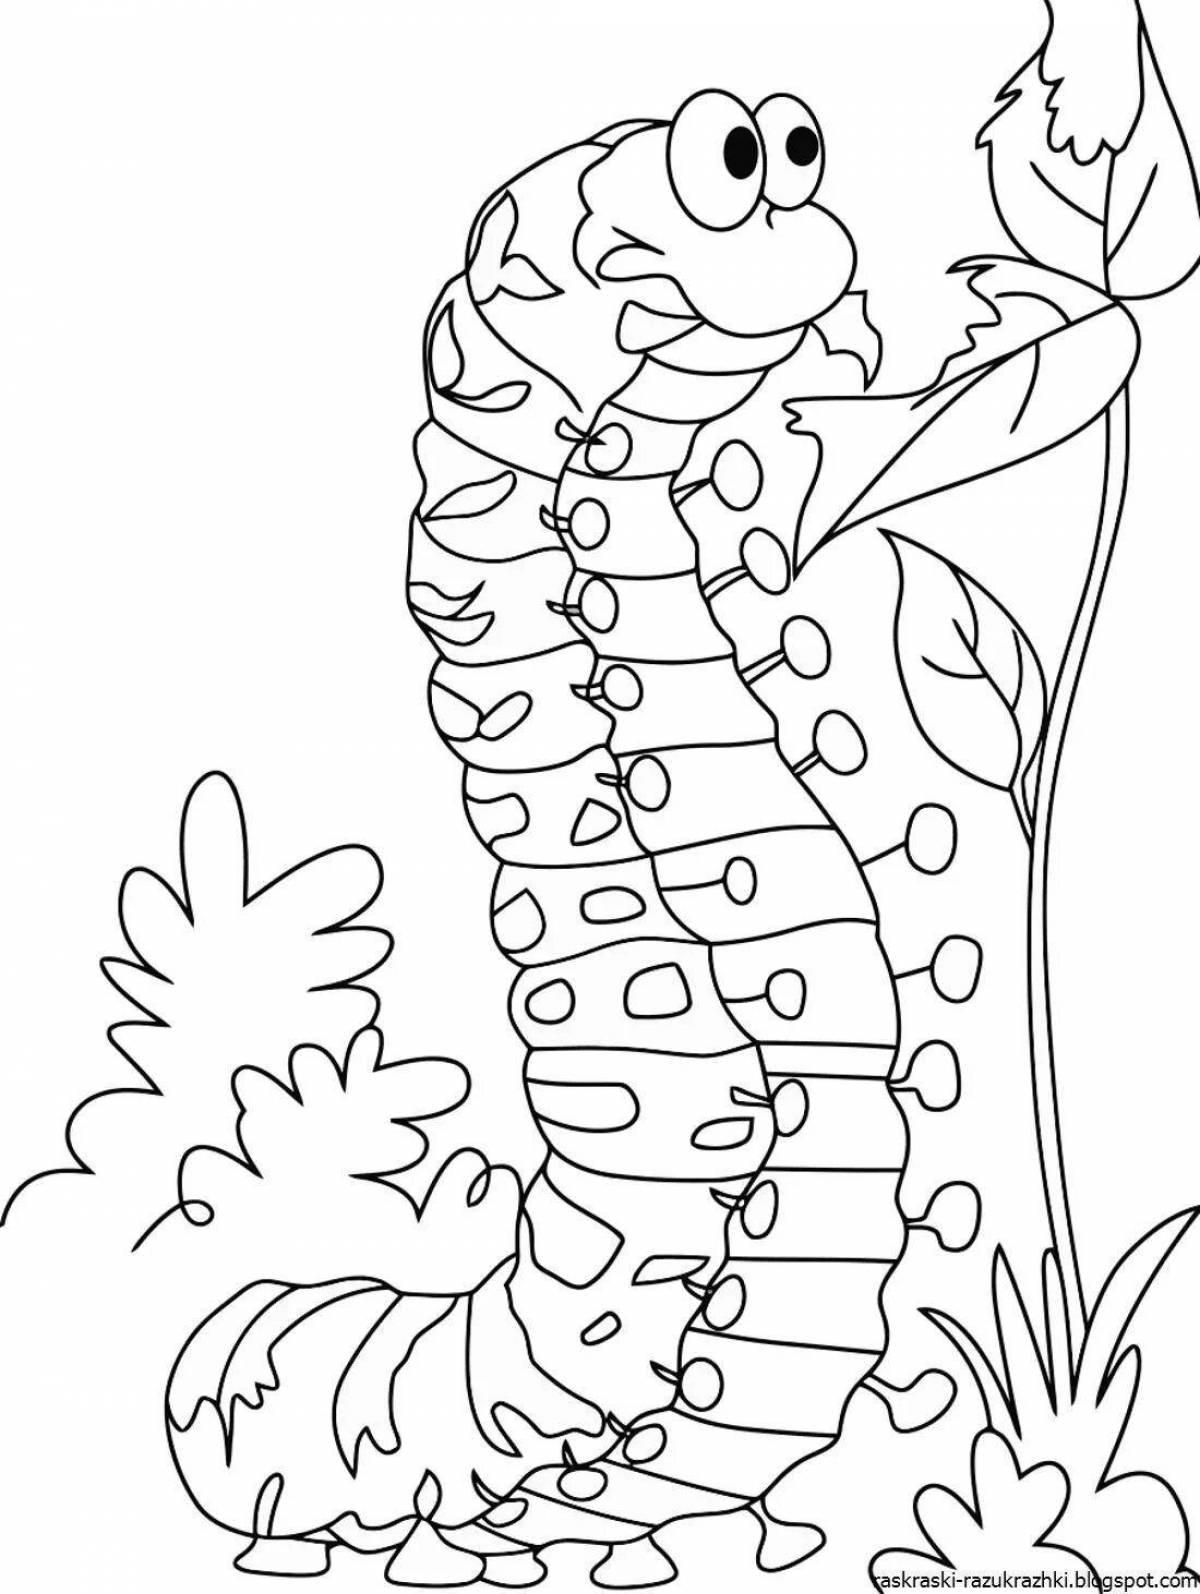 Children's happy caterpillar coloring book